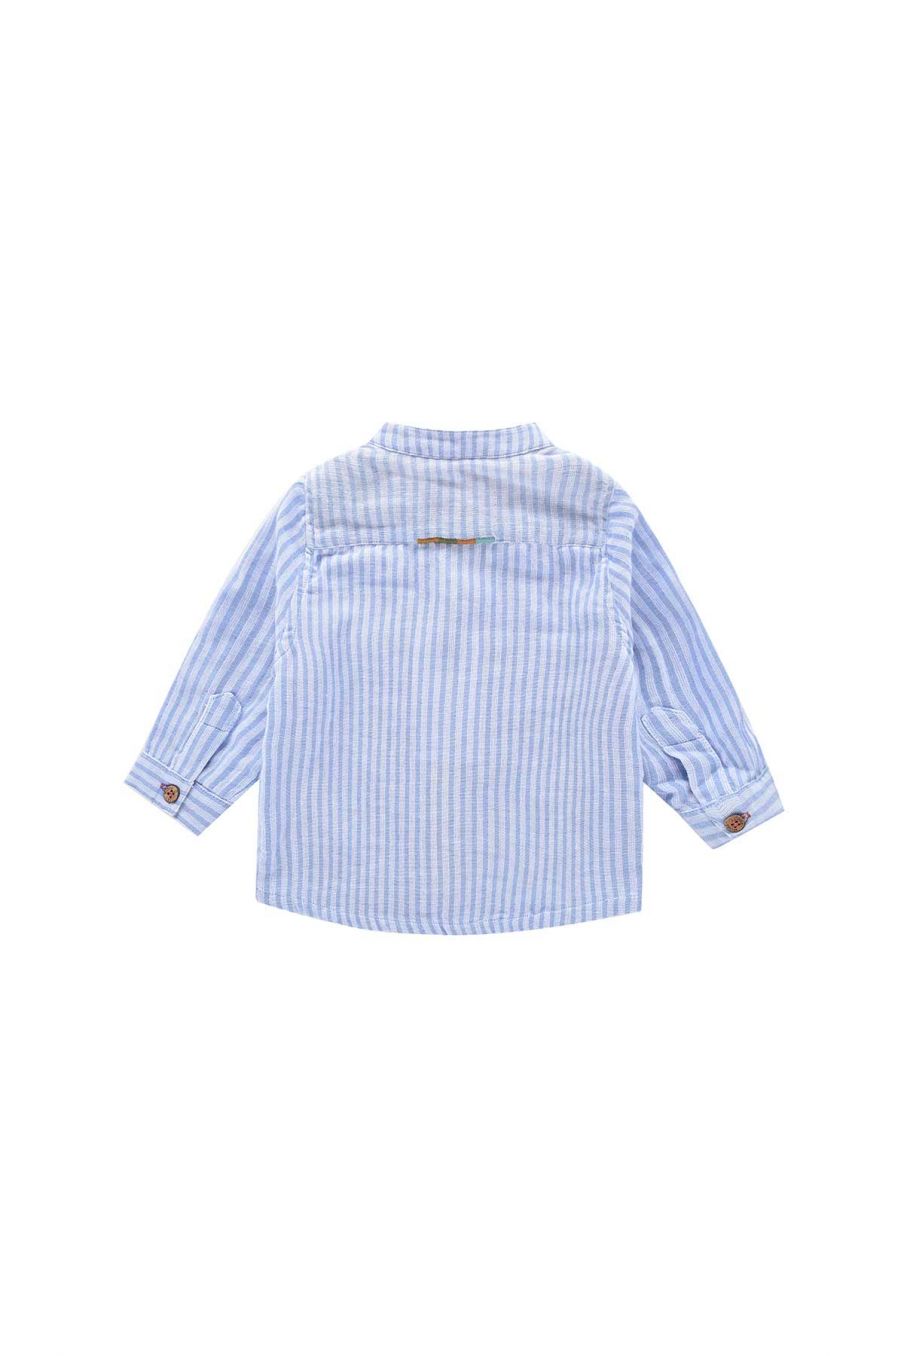 bebe-garcon-chemise-amod-blue-stripes